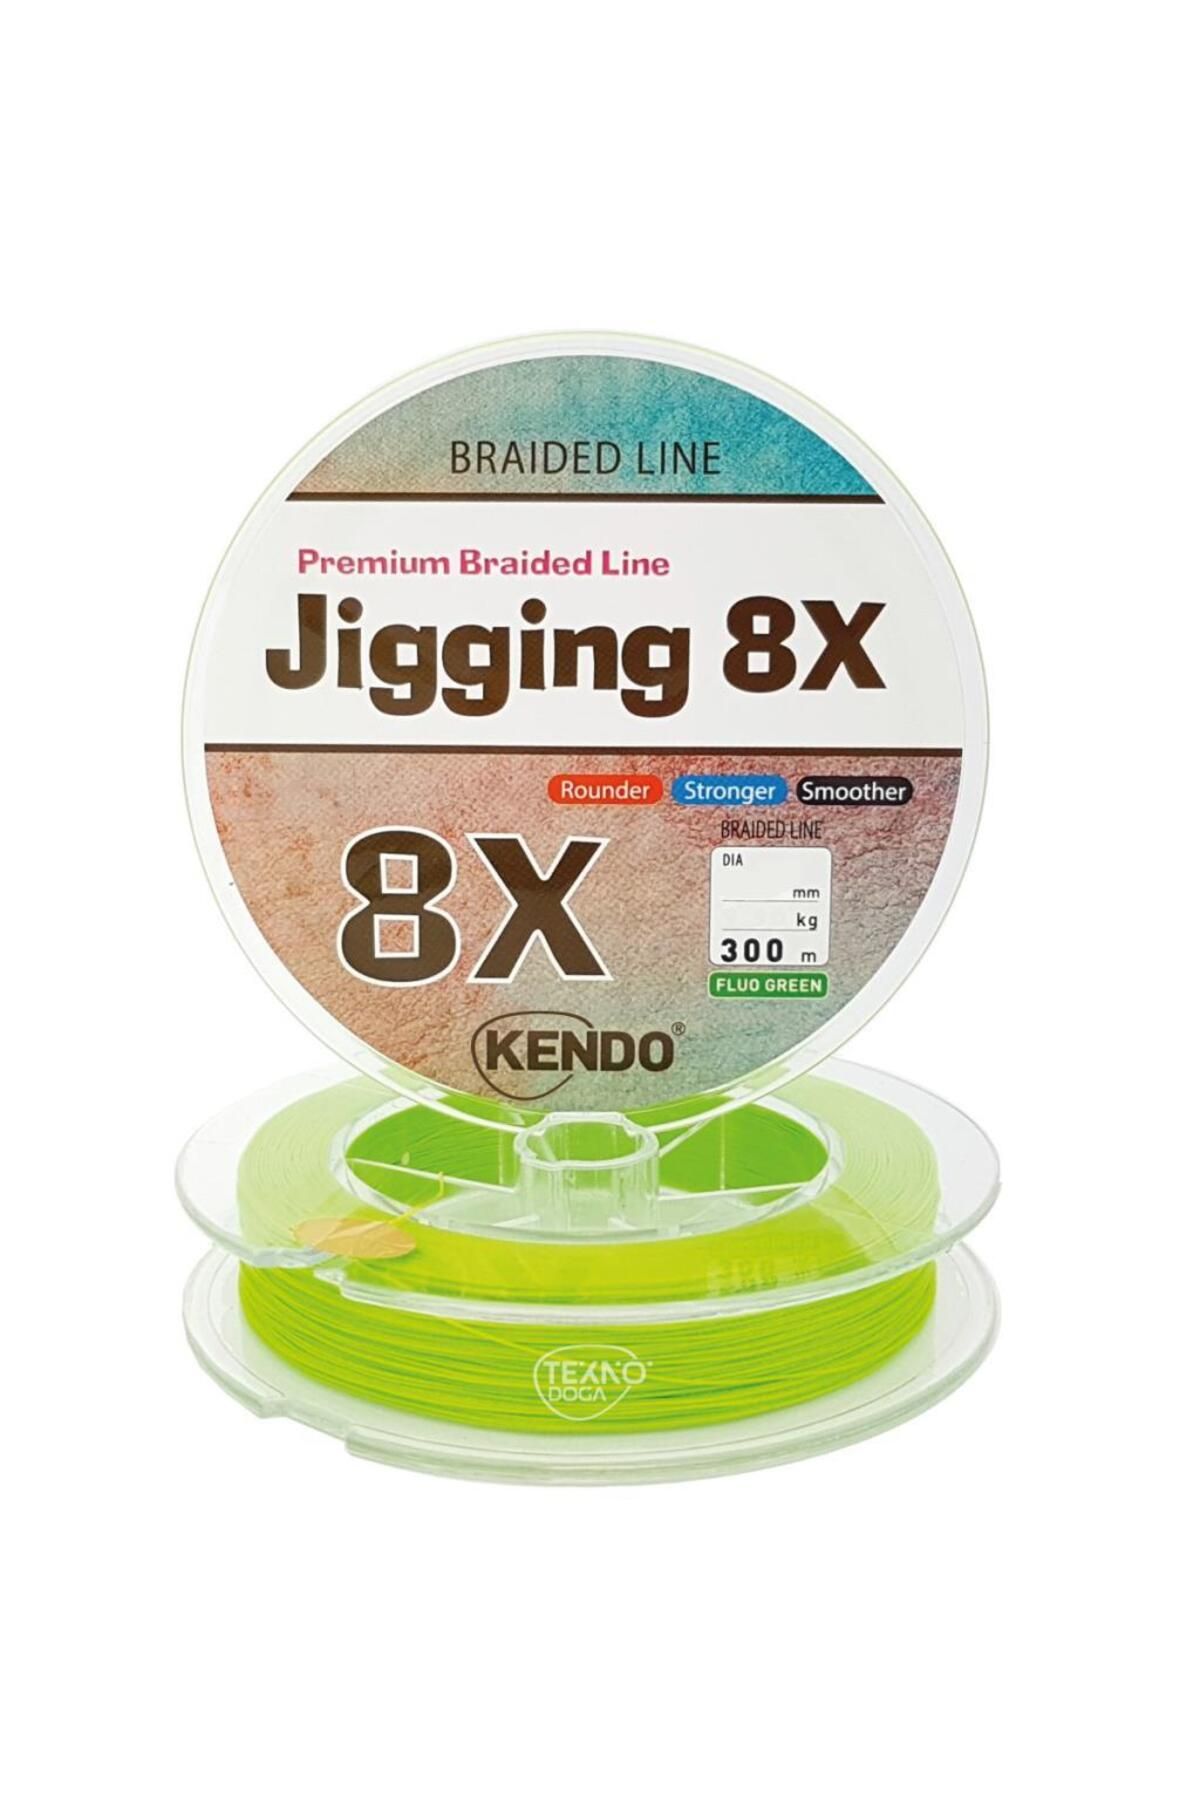 Kendo Jigging 8x Flash ( Fluo Green ) Örgü Ip Olta Misinası 300mt 0.32 Mm